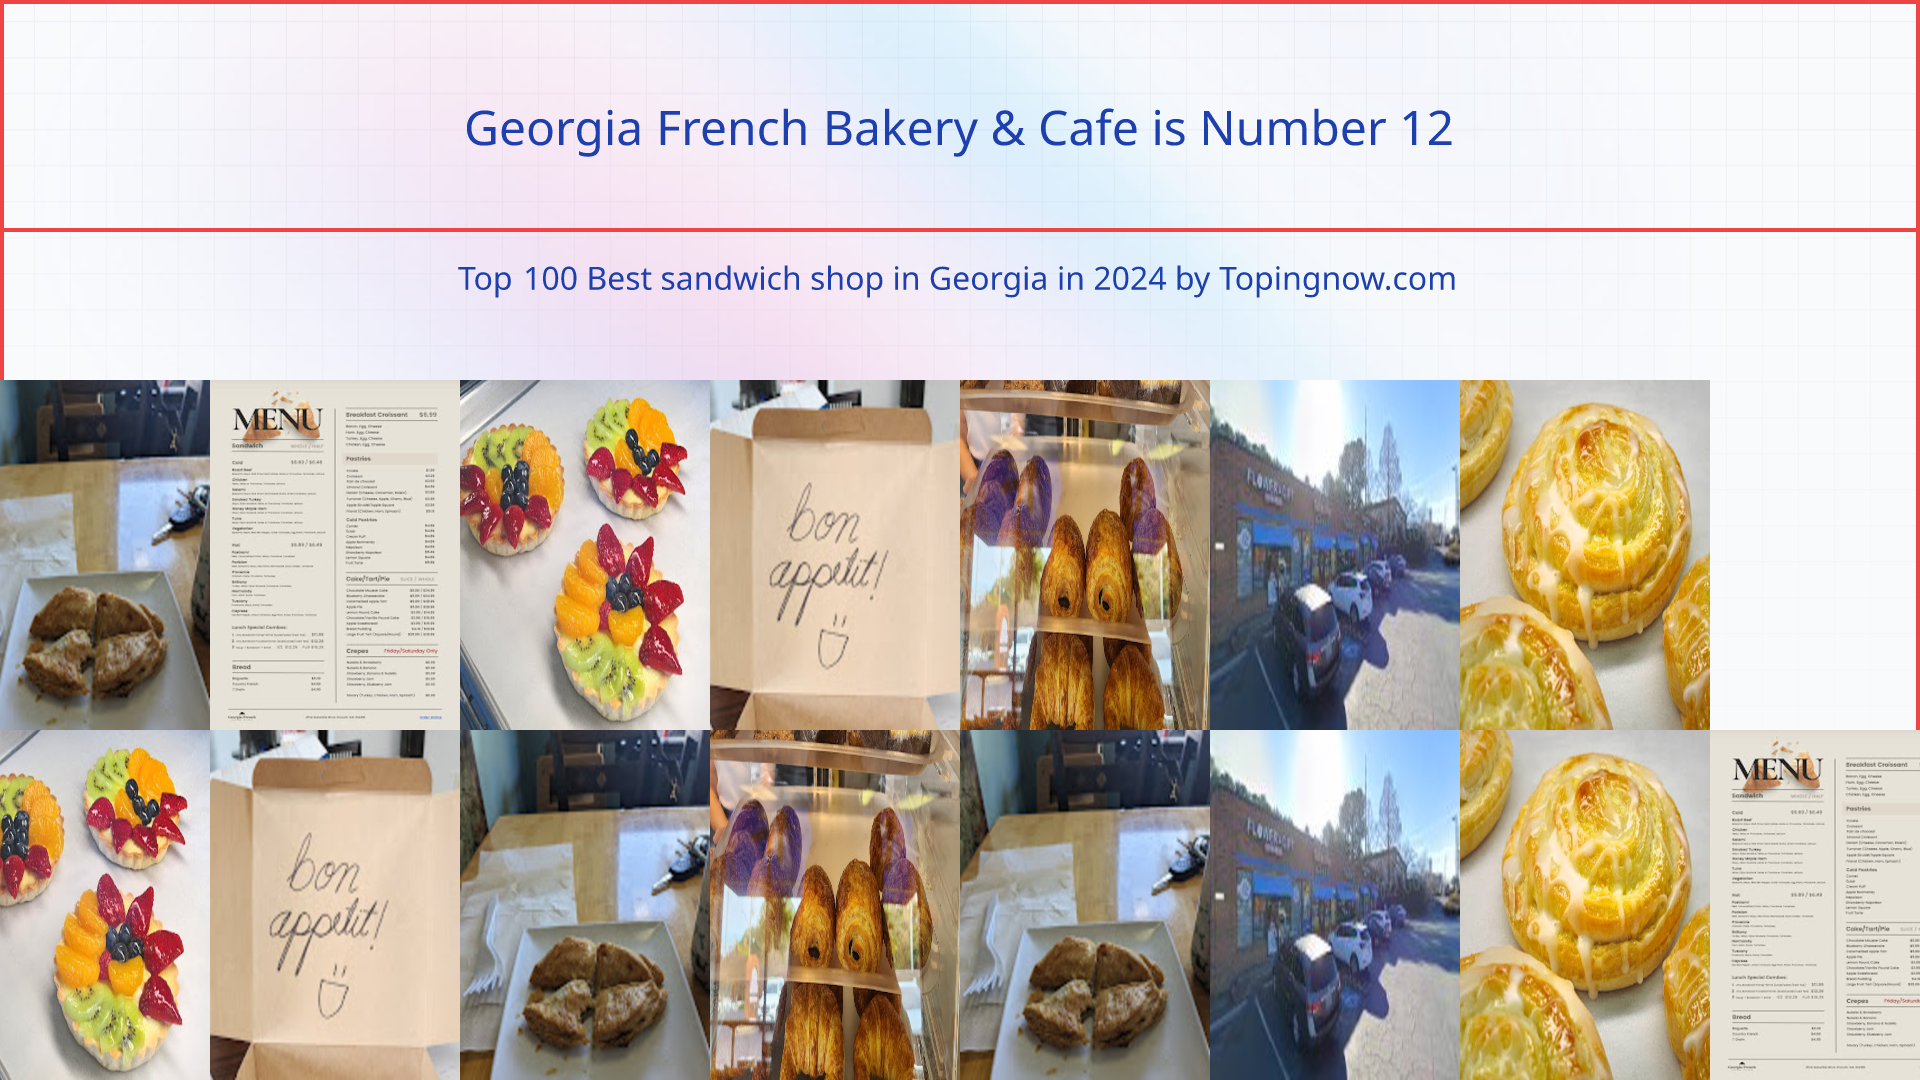 Georgia French Bakery & Cafe: Top 100 Best sandwich shop in Georgia in 2024